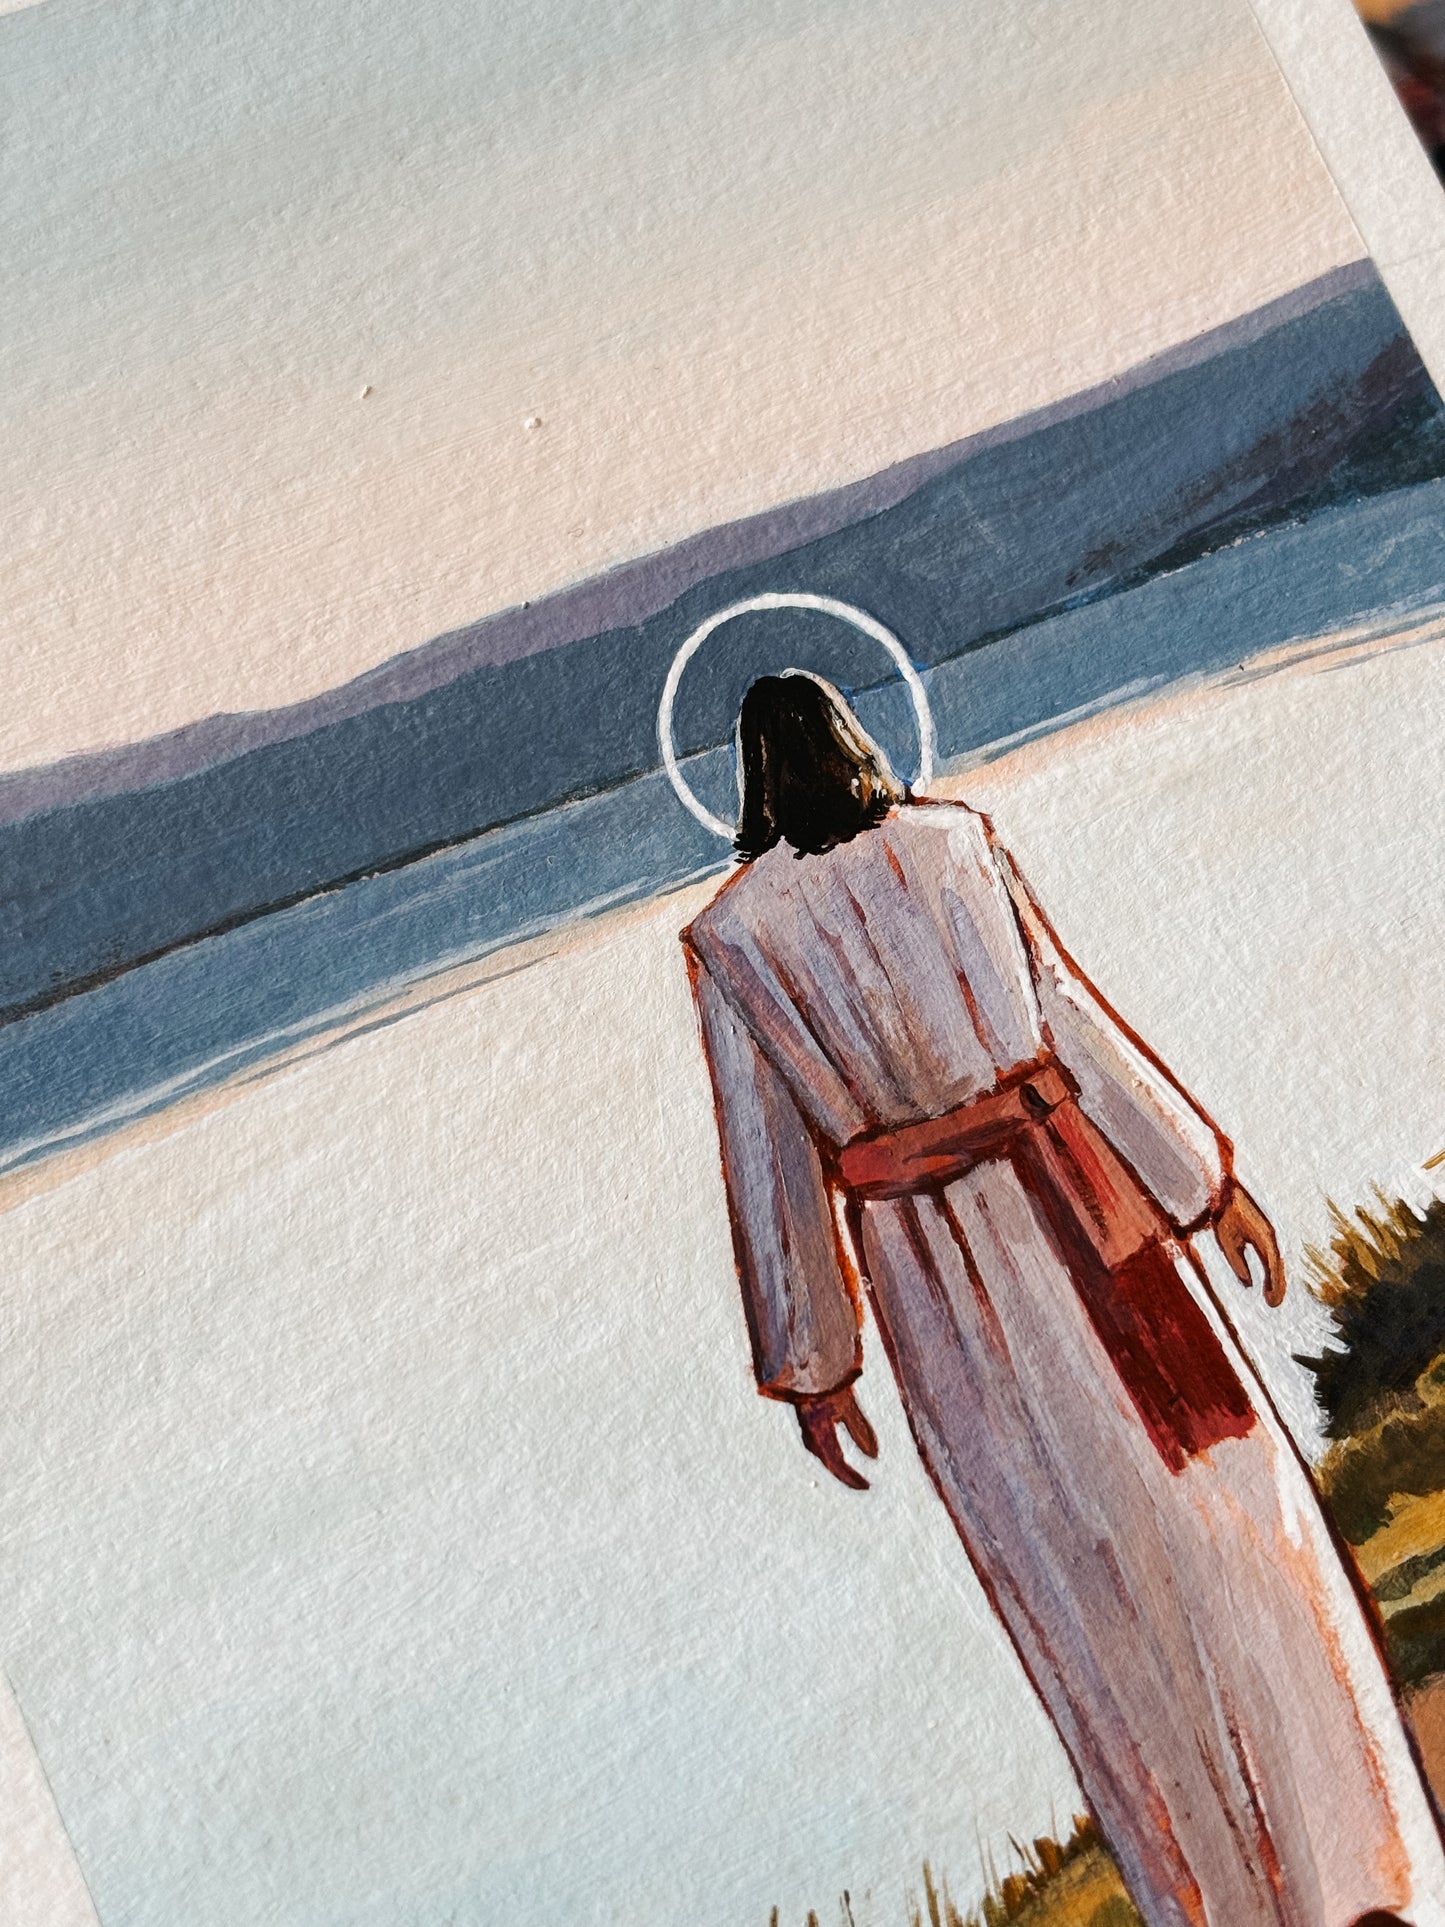 'He Leadeth Me Beside Still Waters' 5x7 inch original painting